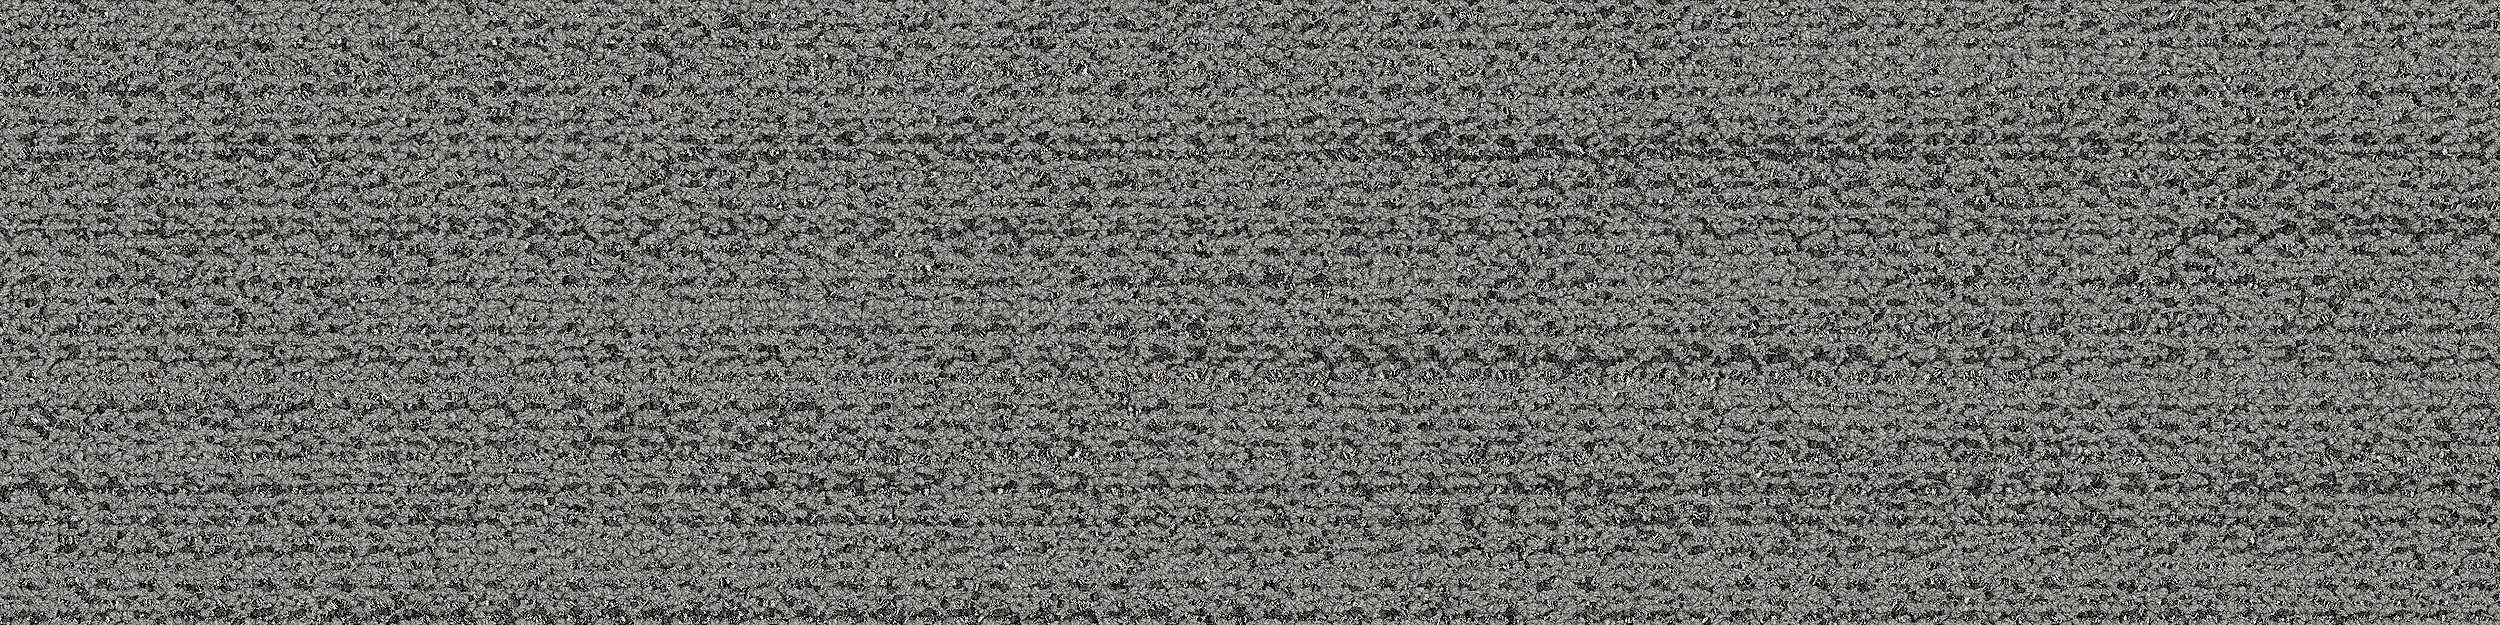 WW870 Carpet Tile In Flannel Weft imagen número 9